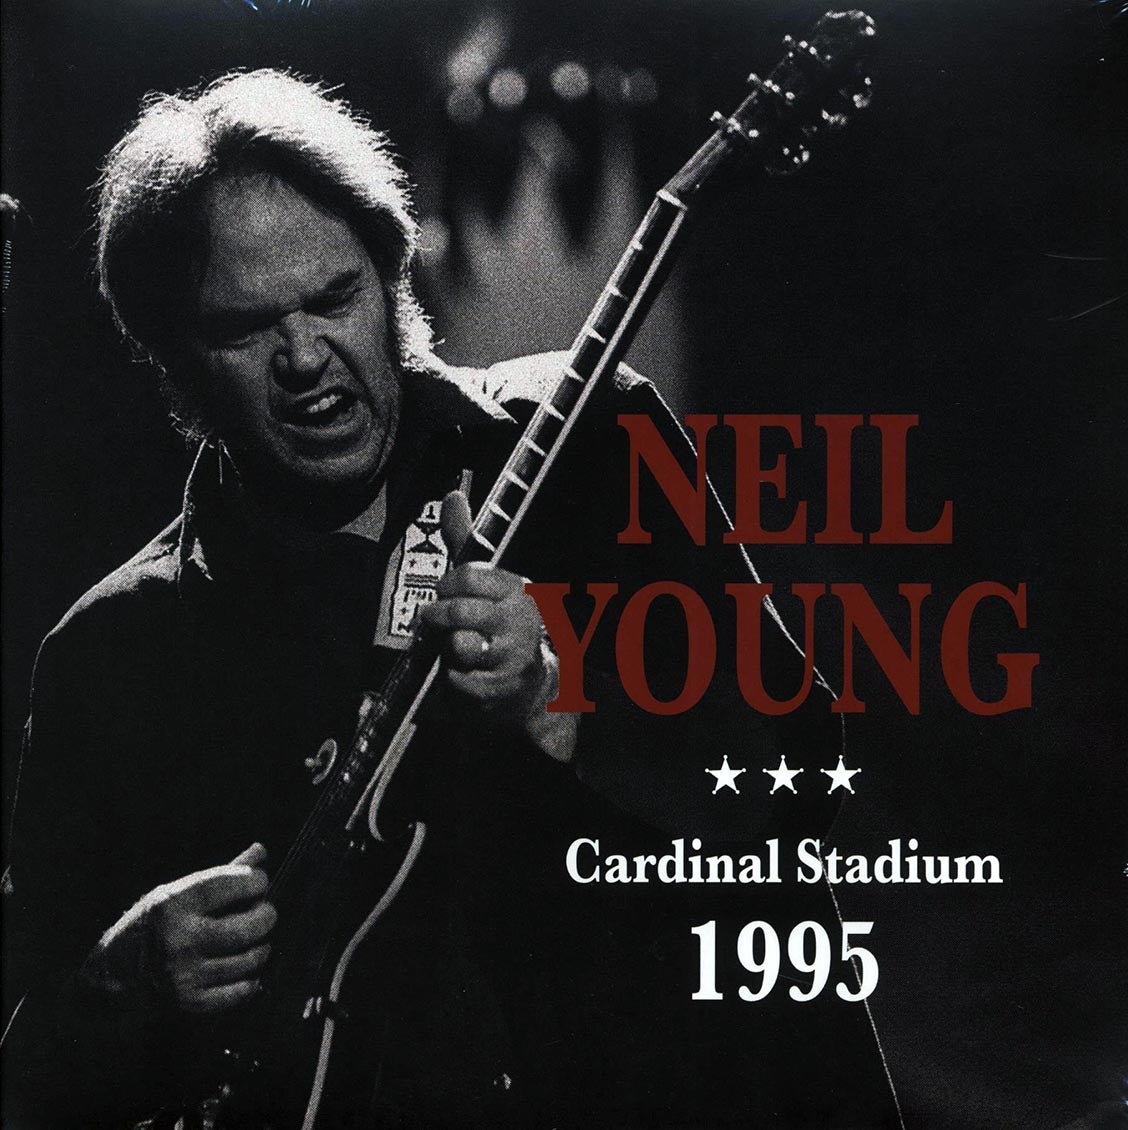 Neil Young - Cardinal Stadium 1995 (2xLP) - Vinyl LP